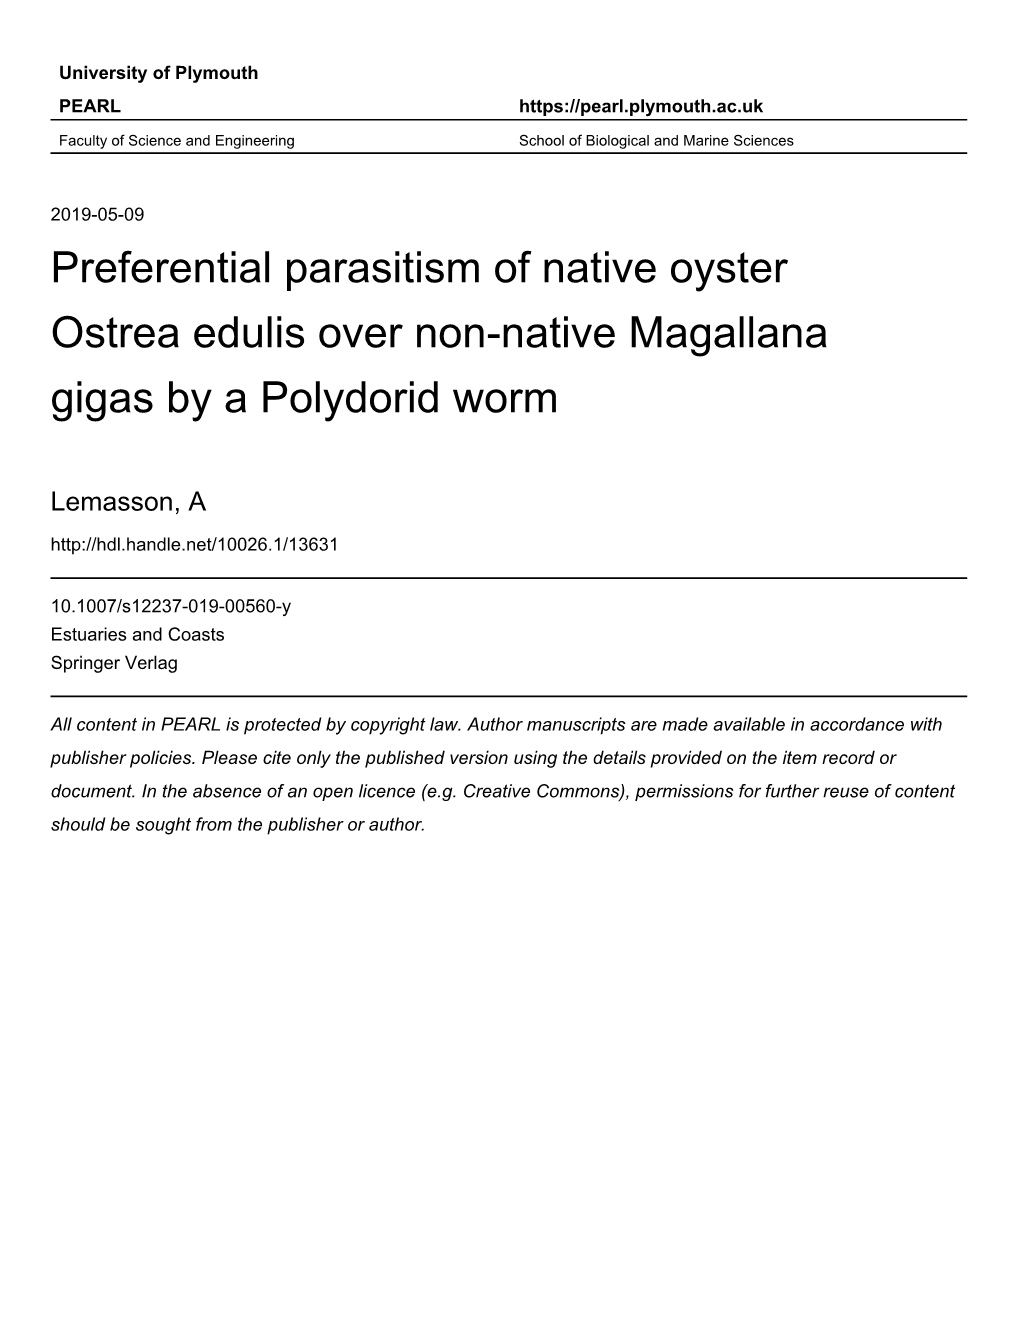 Preferential Parasitism of Native Oyster Ostrea Edulis Over Non-Native Magallana Gigas by a Polydorid Worm